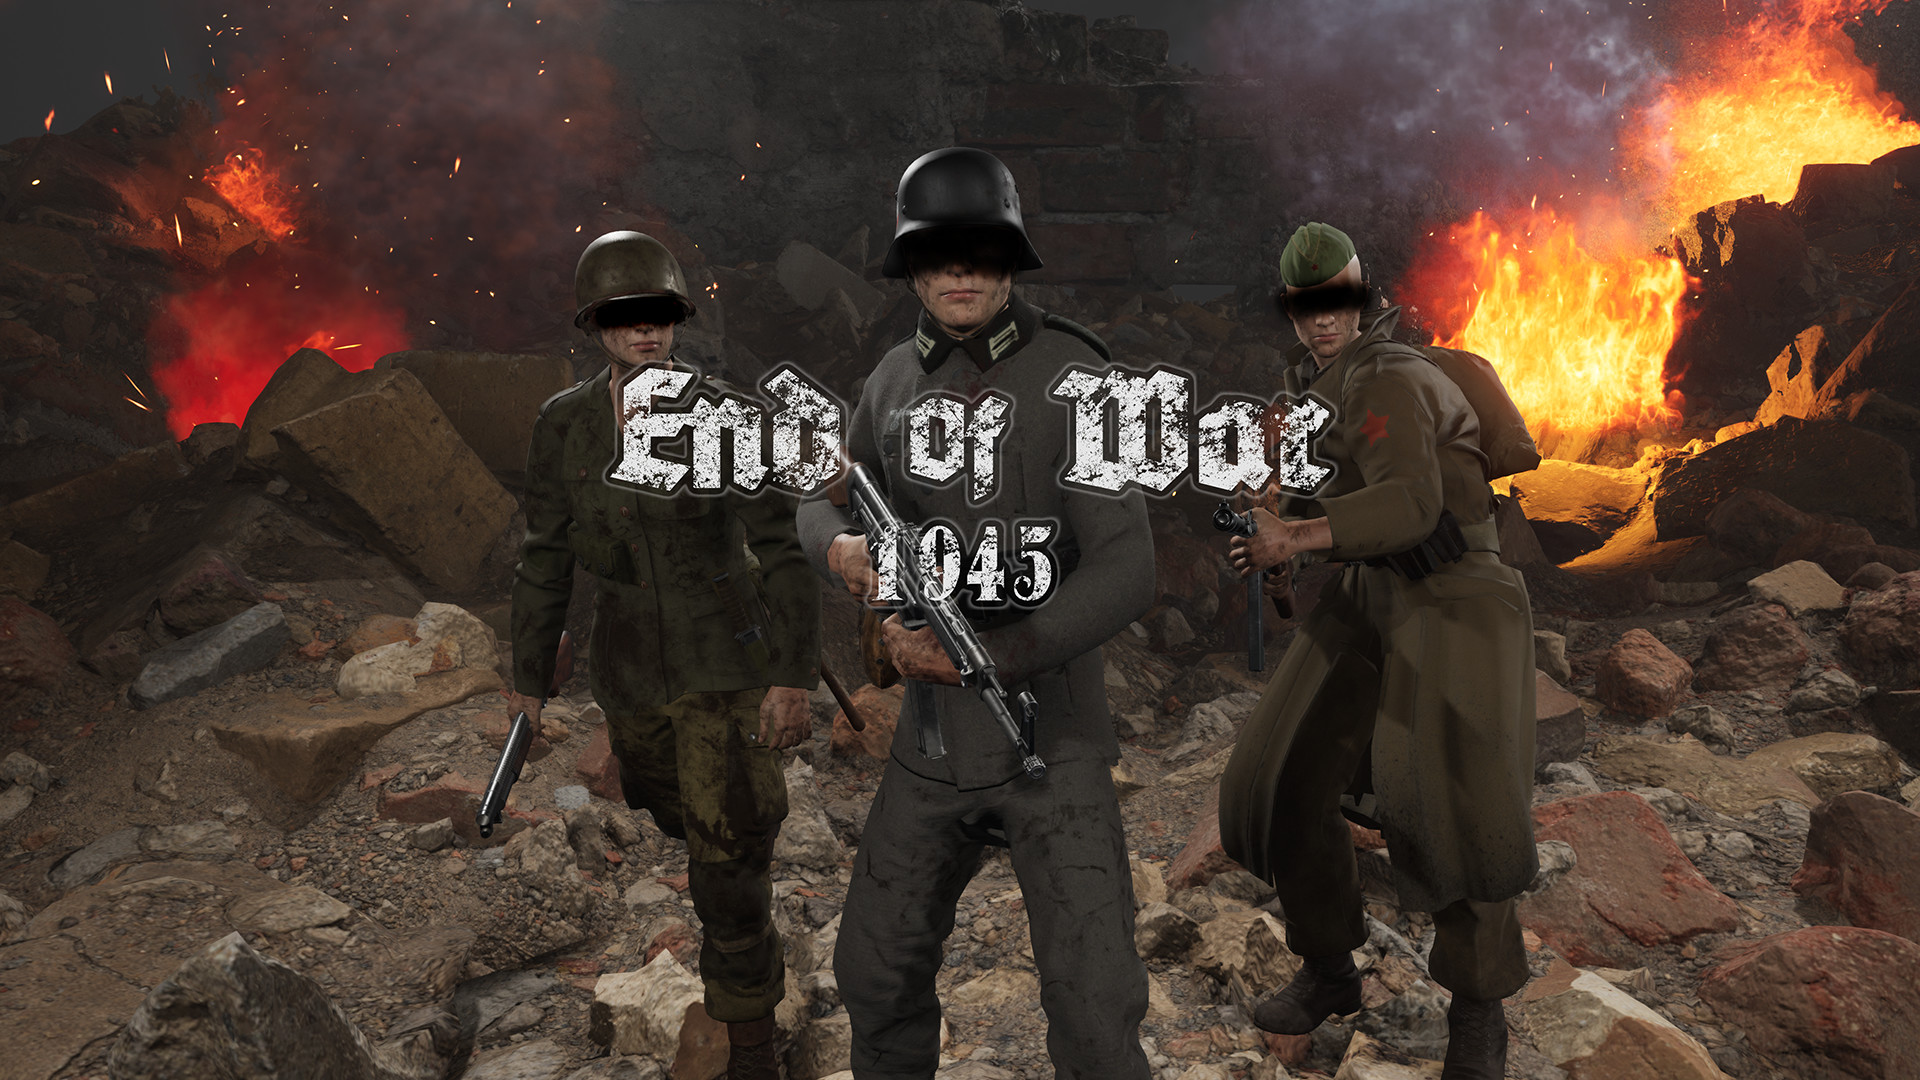 End of War 1945 Soundtrack Featured Screenshot #1